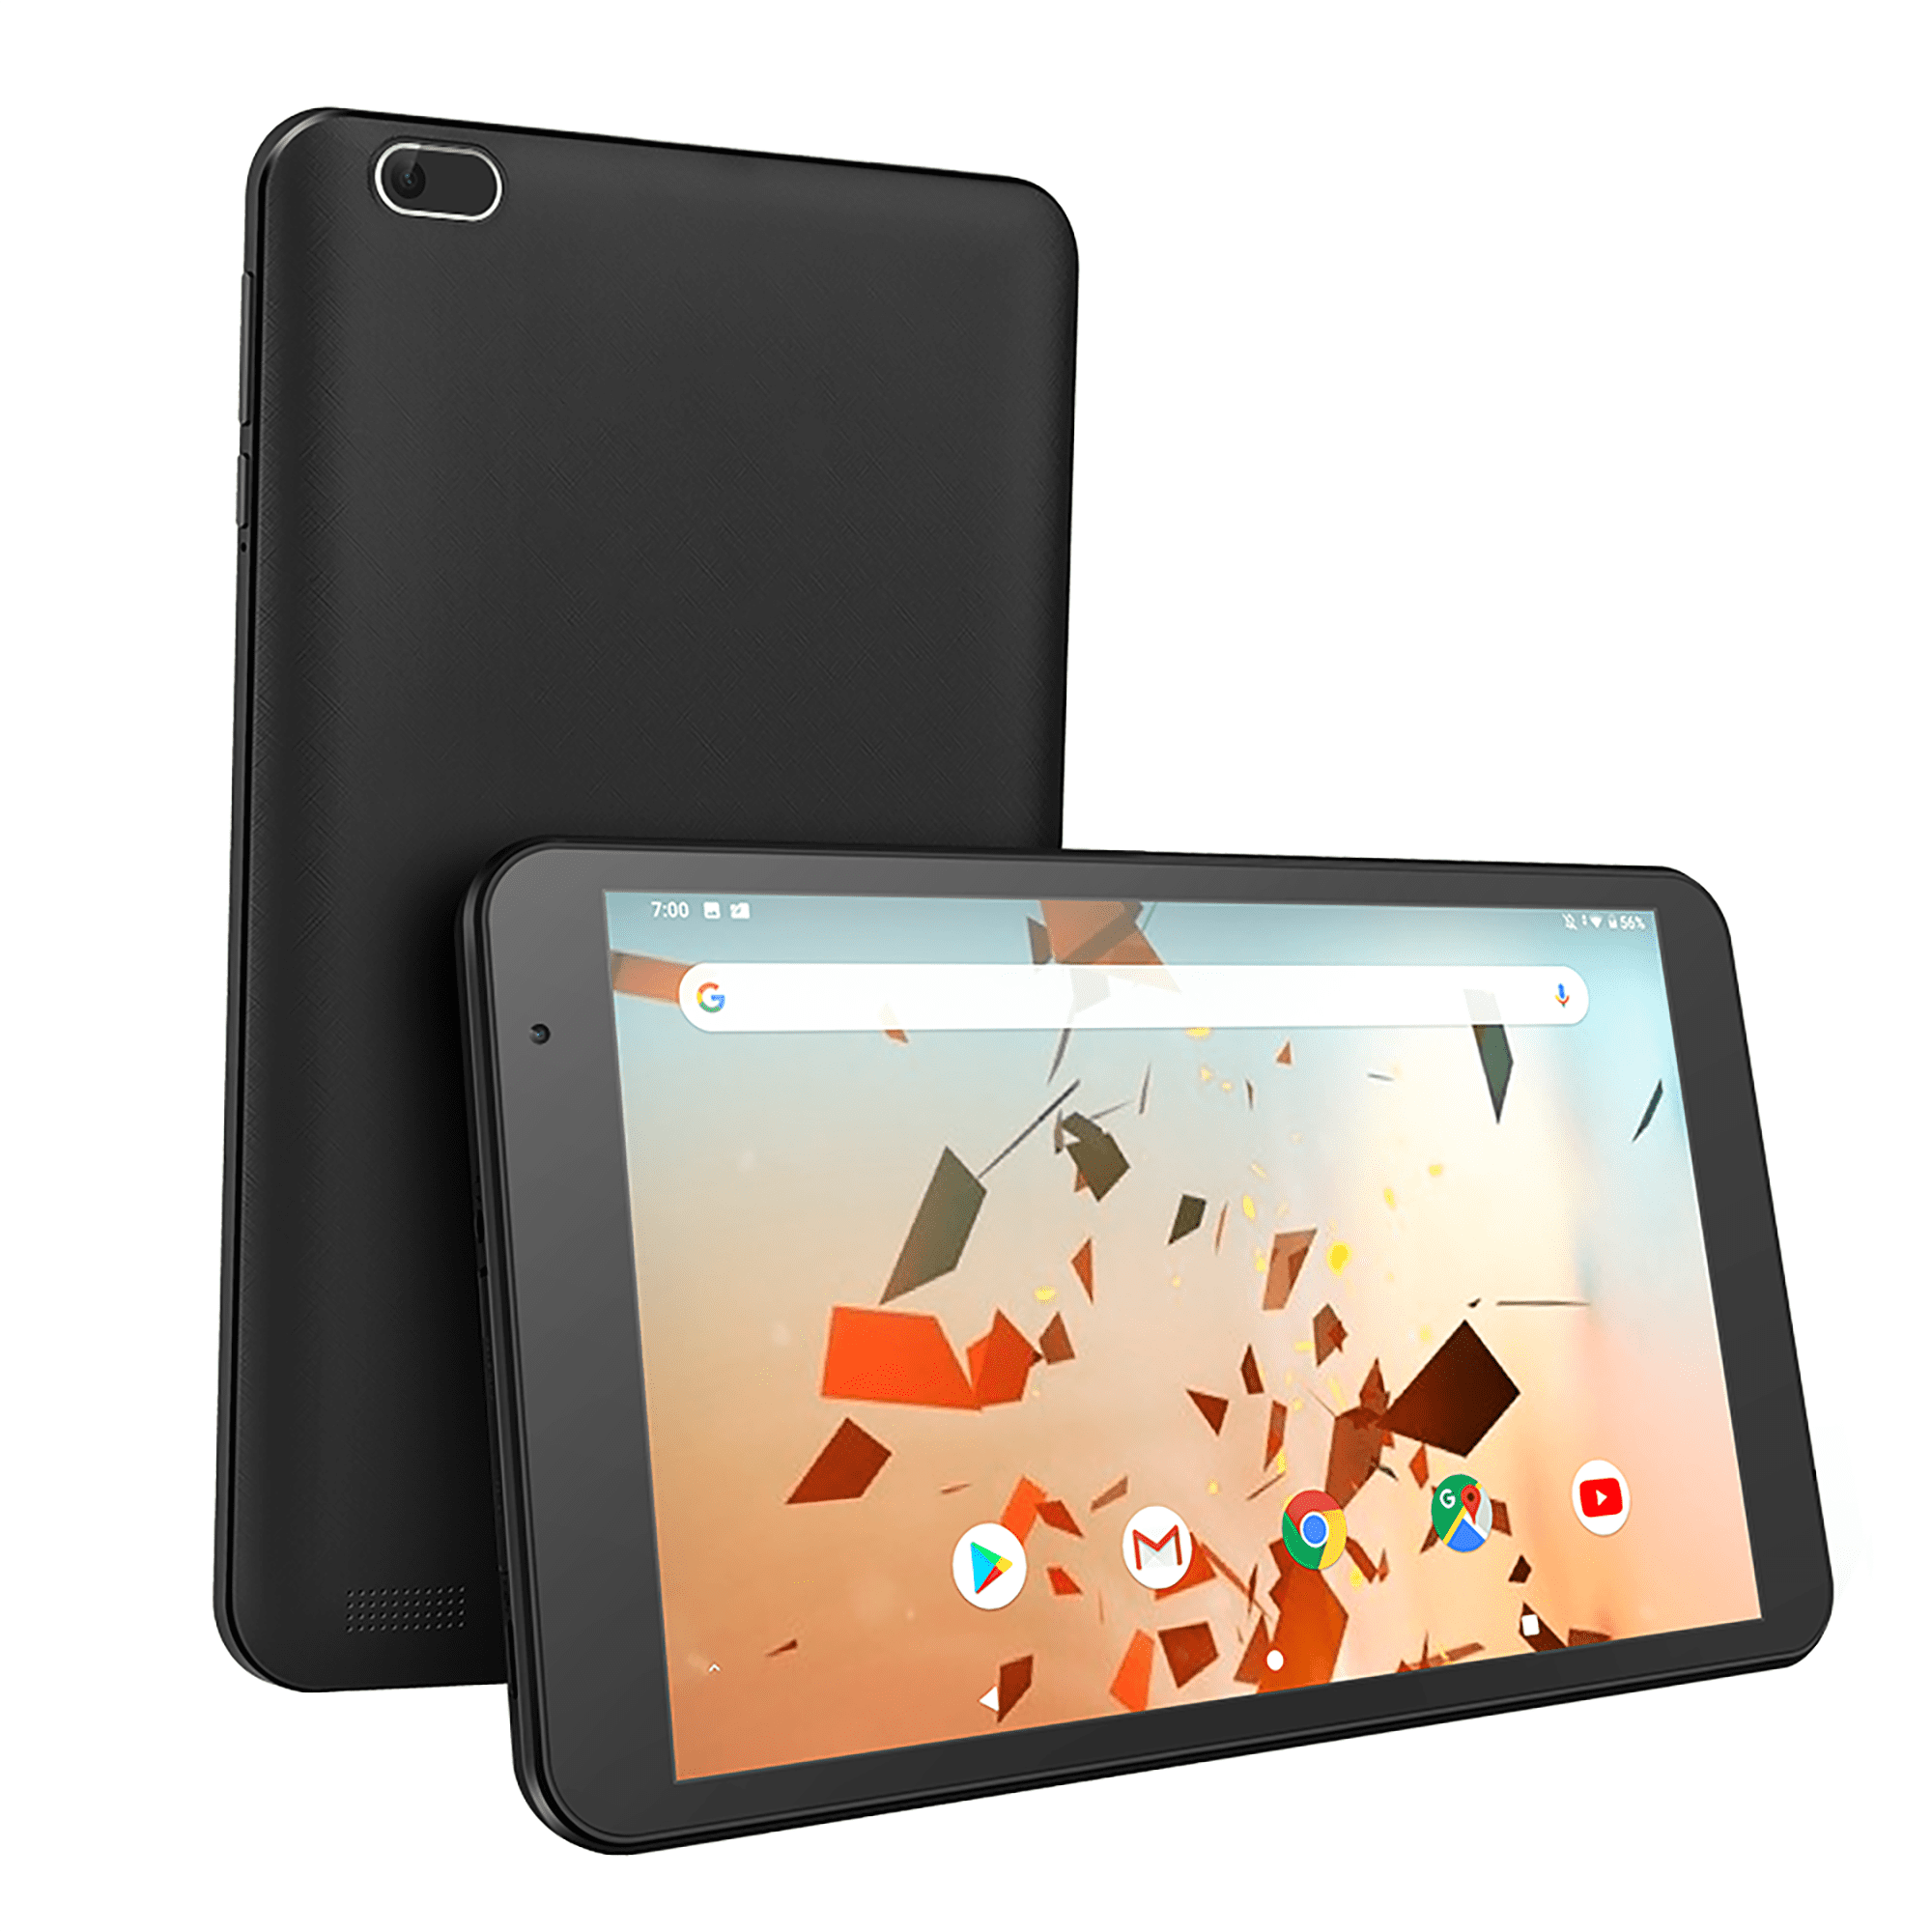 Vankyo 7 inch tablet, Android Tablet, Storage, processor, Wi-Fi, GPS, FM, Black Walmart.com